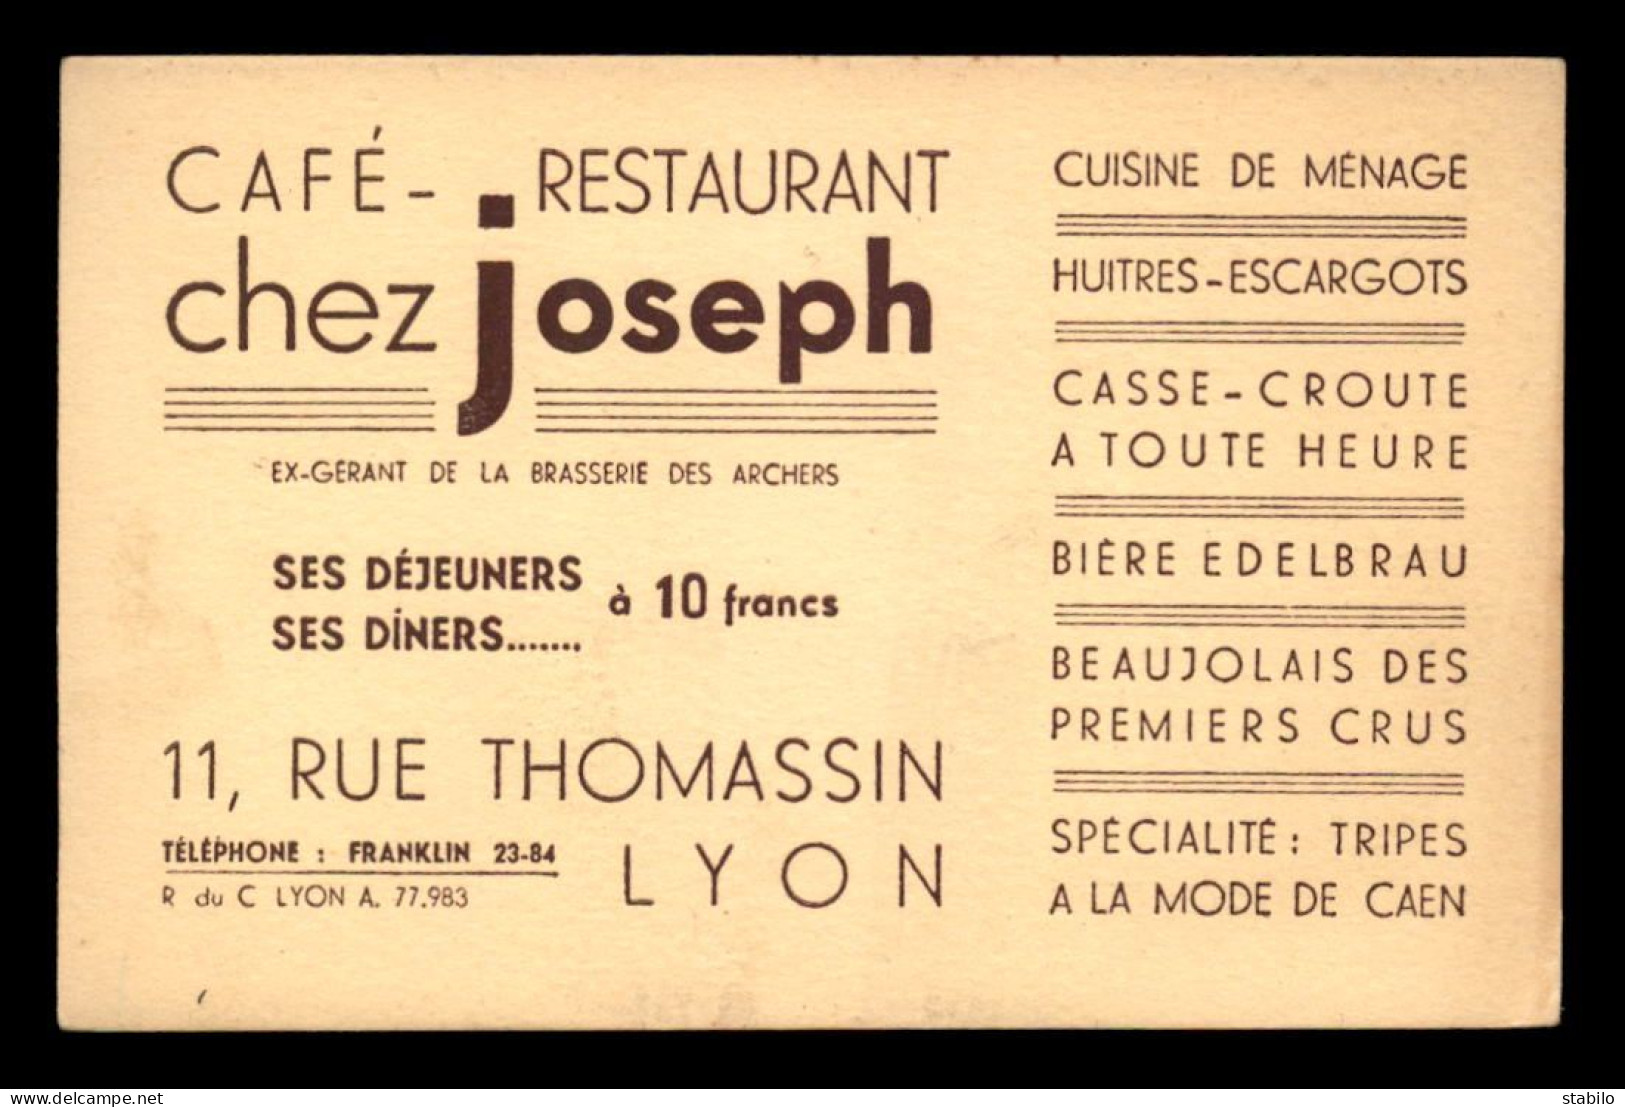 CARTE DE VISITE - CAFE-RESTAURANT "CHEZ JOSEPH" 11 RUE THOMASSIN, LYON - FORMAT 8.5 X 13 CM - Visitenkarten